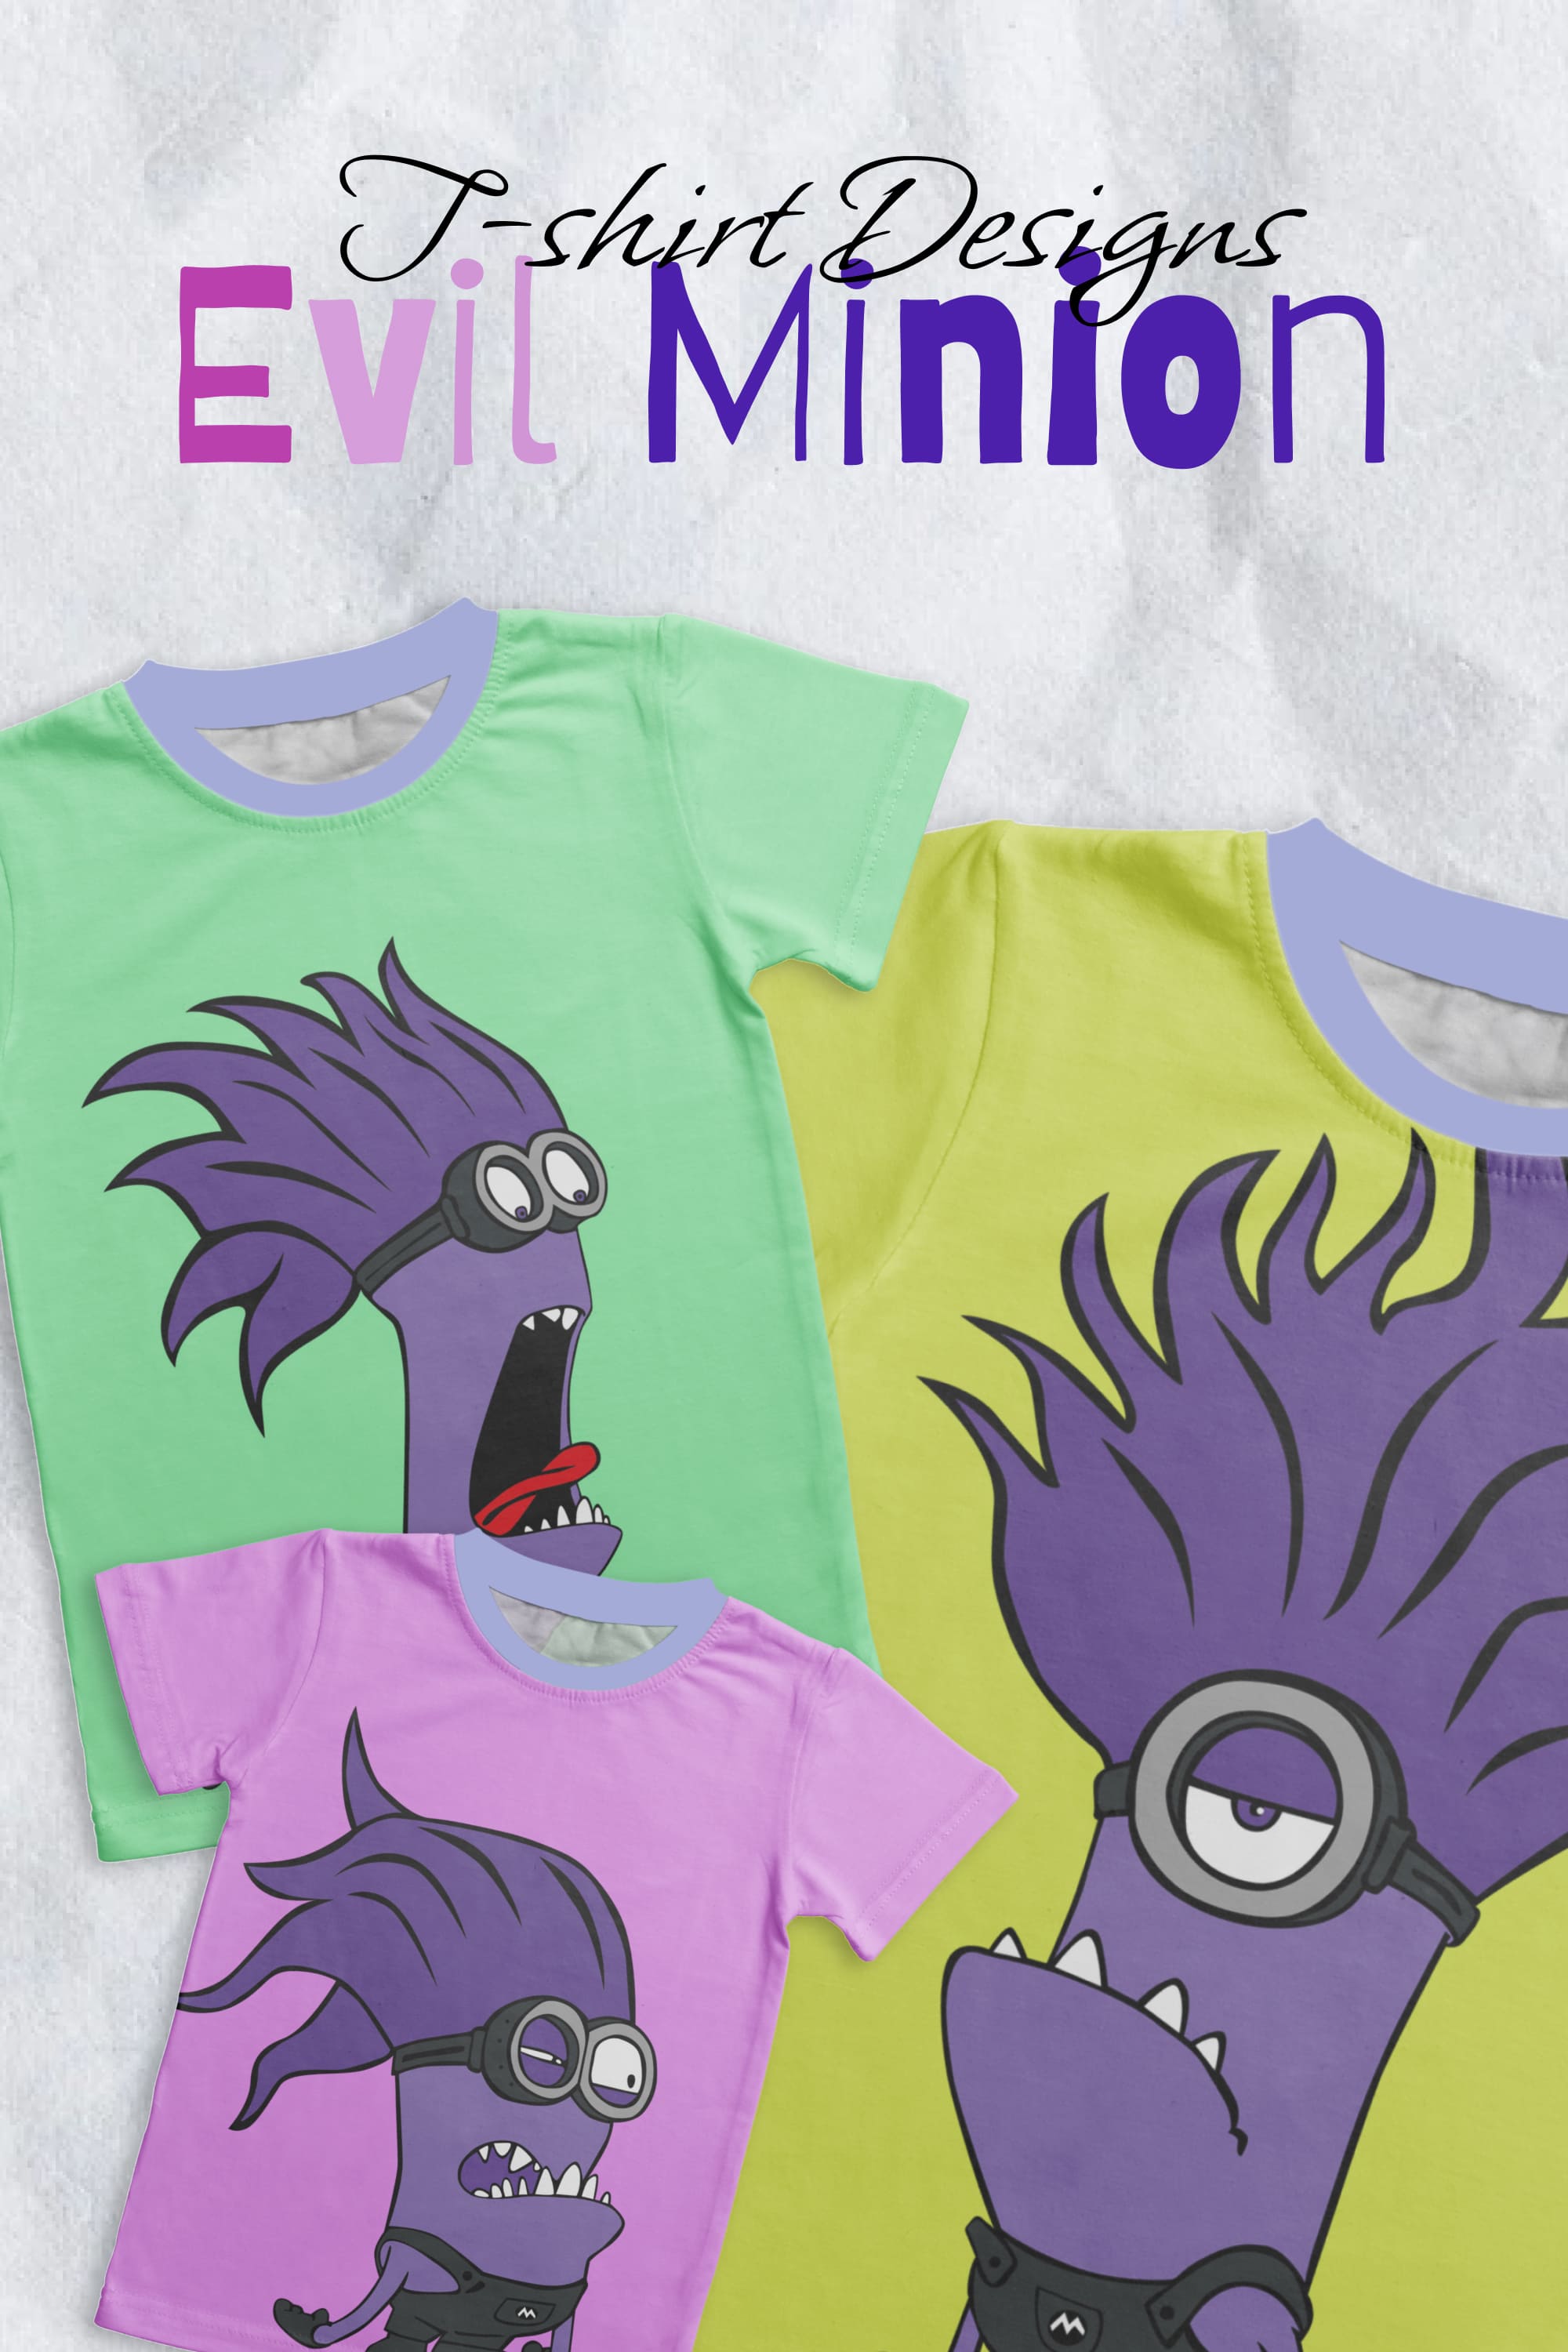 Evil Minion T-shirt Designs - Pinterest.